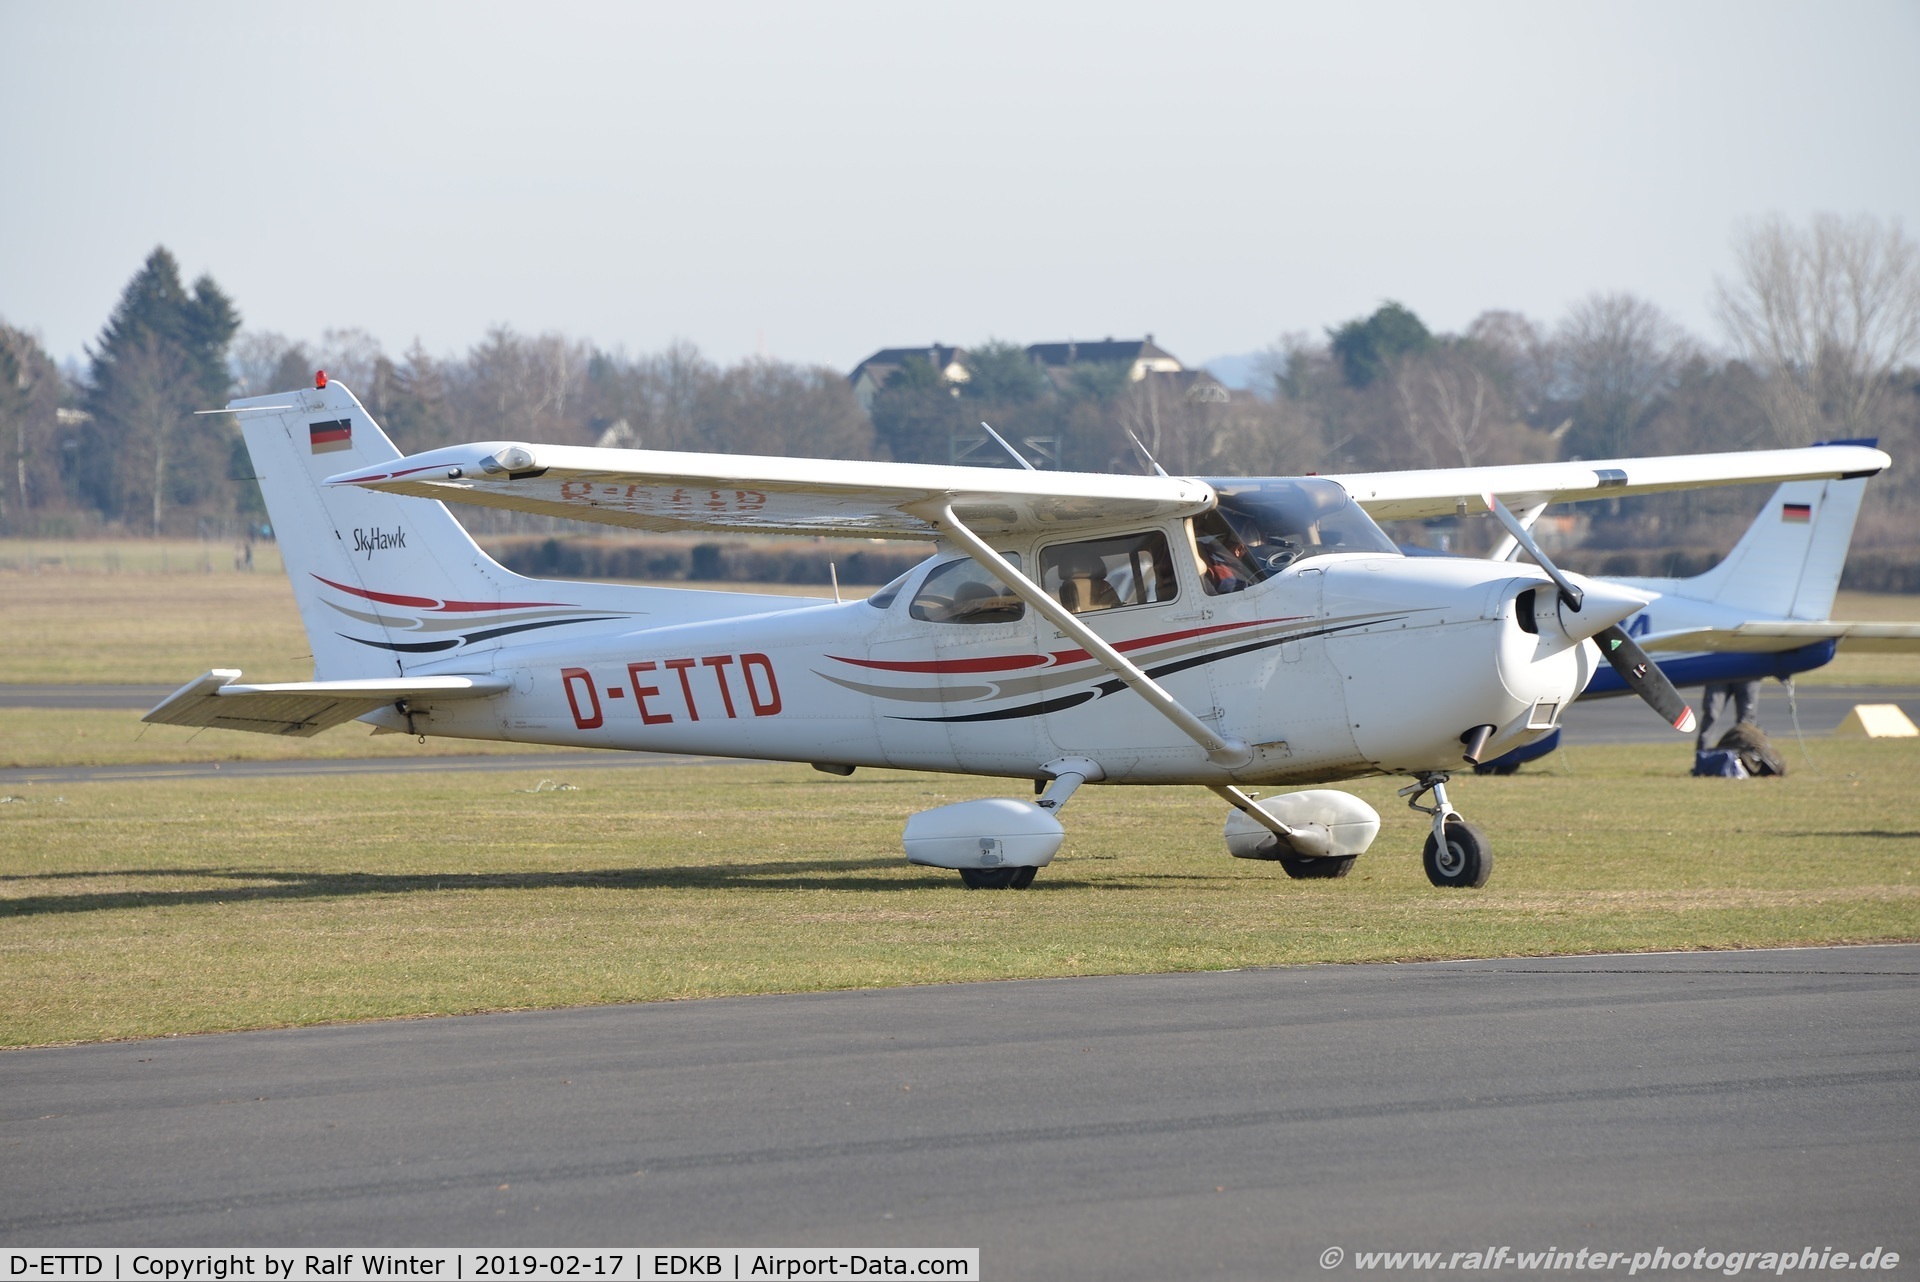 D-ETTD, 2004 Cessna 172R Skyhawk C/N 172-81218, Cessna 172R Skyhawk II - ATC Aviation Training & Transport Center GmbH - 17281218 - D-ETTD - 17.02.2019 - EDKB